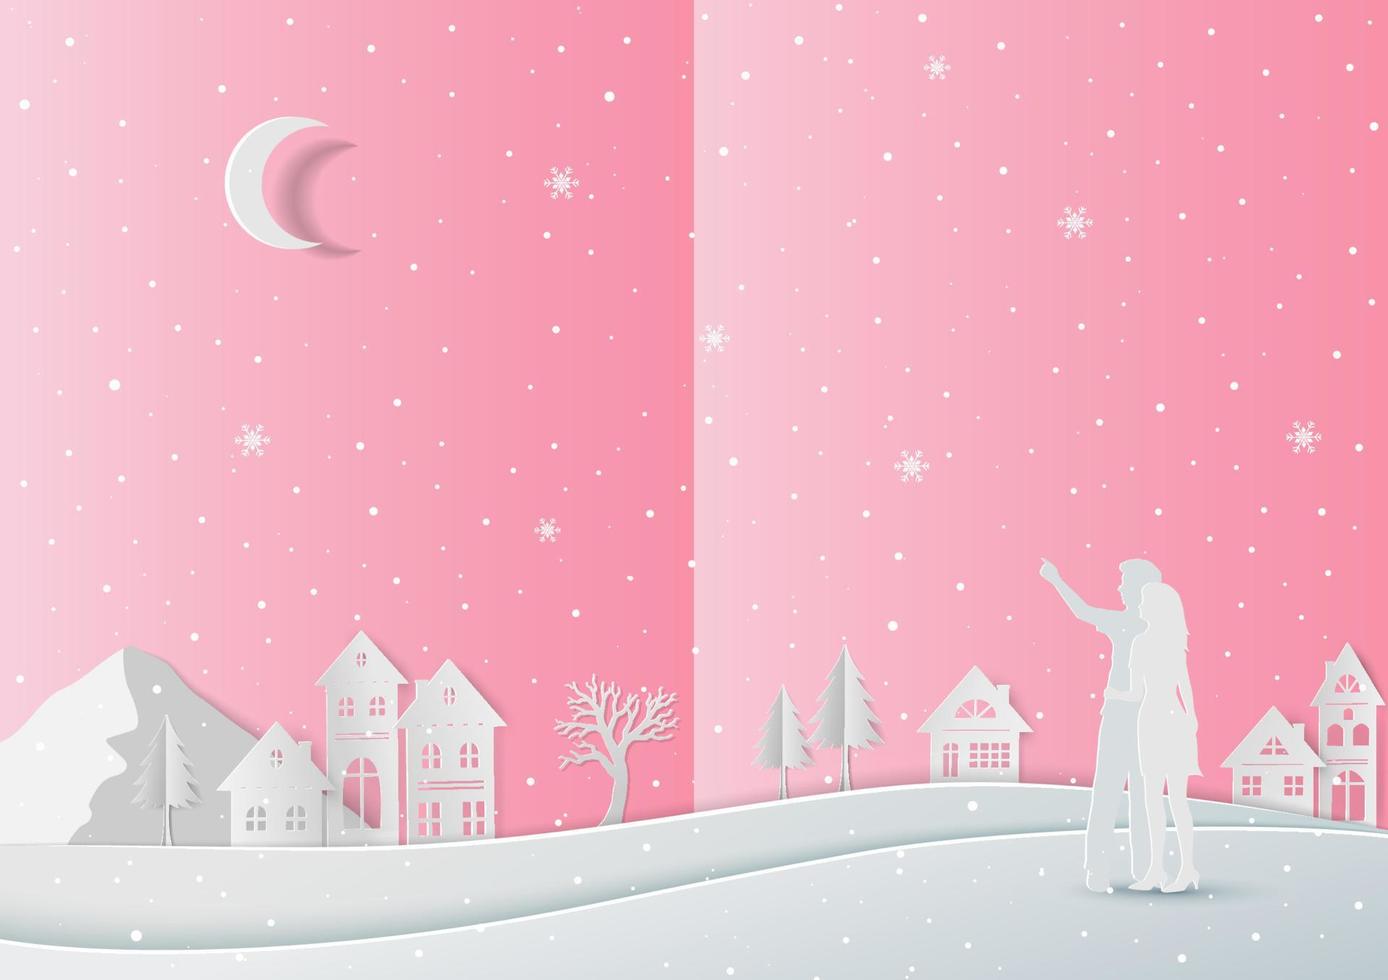 kärlek på vintern koncept med papperskonst på romantisk bakgrund vektor